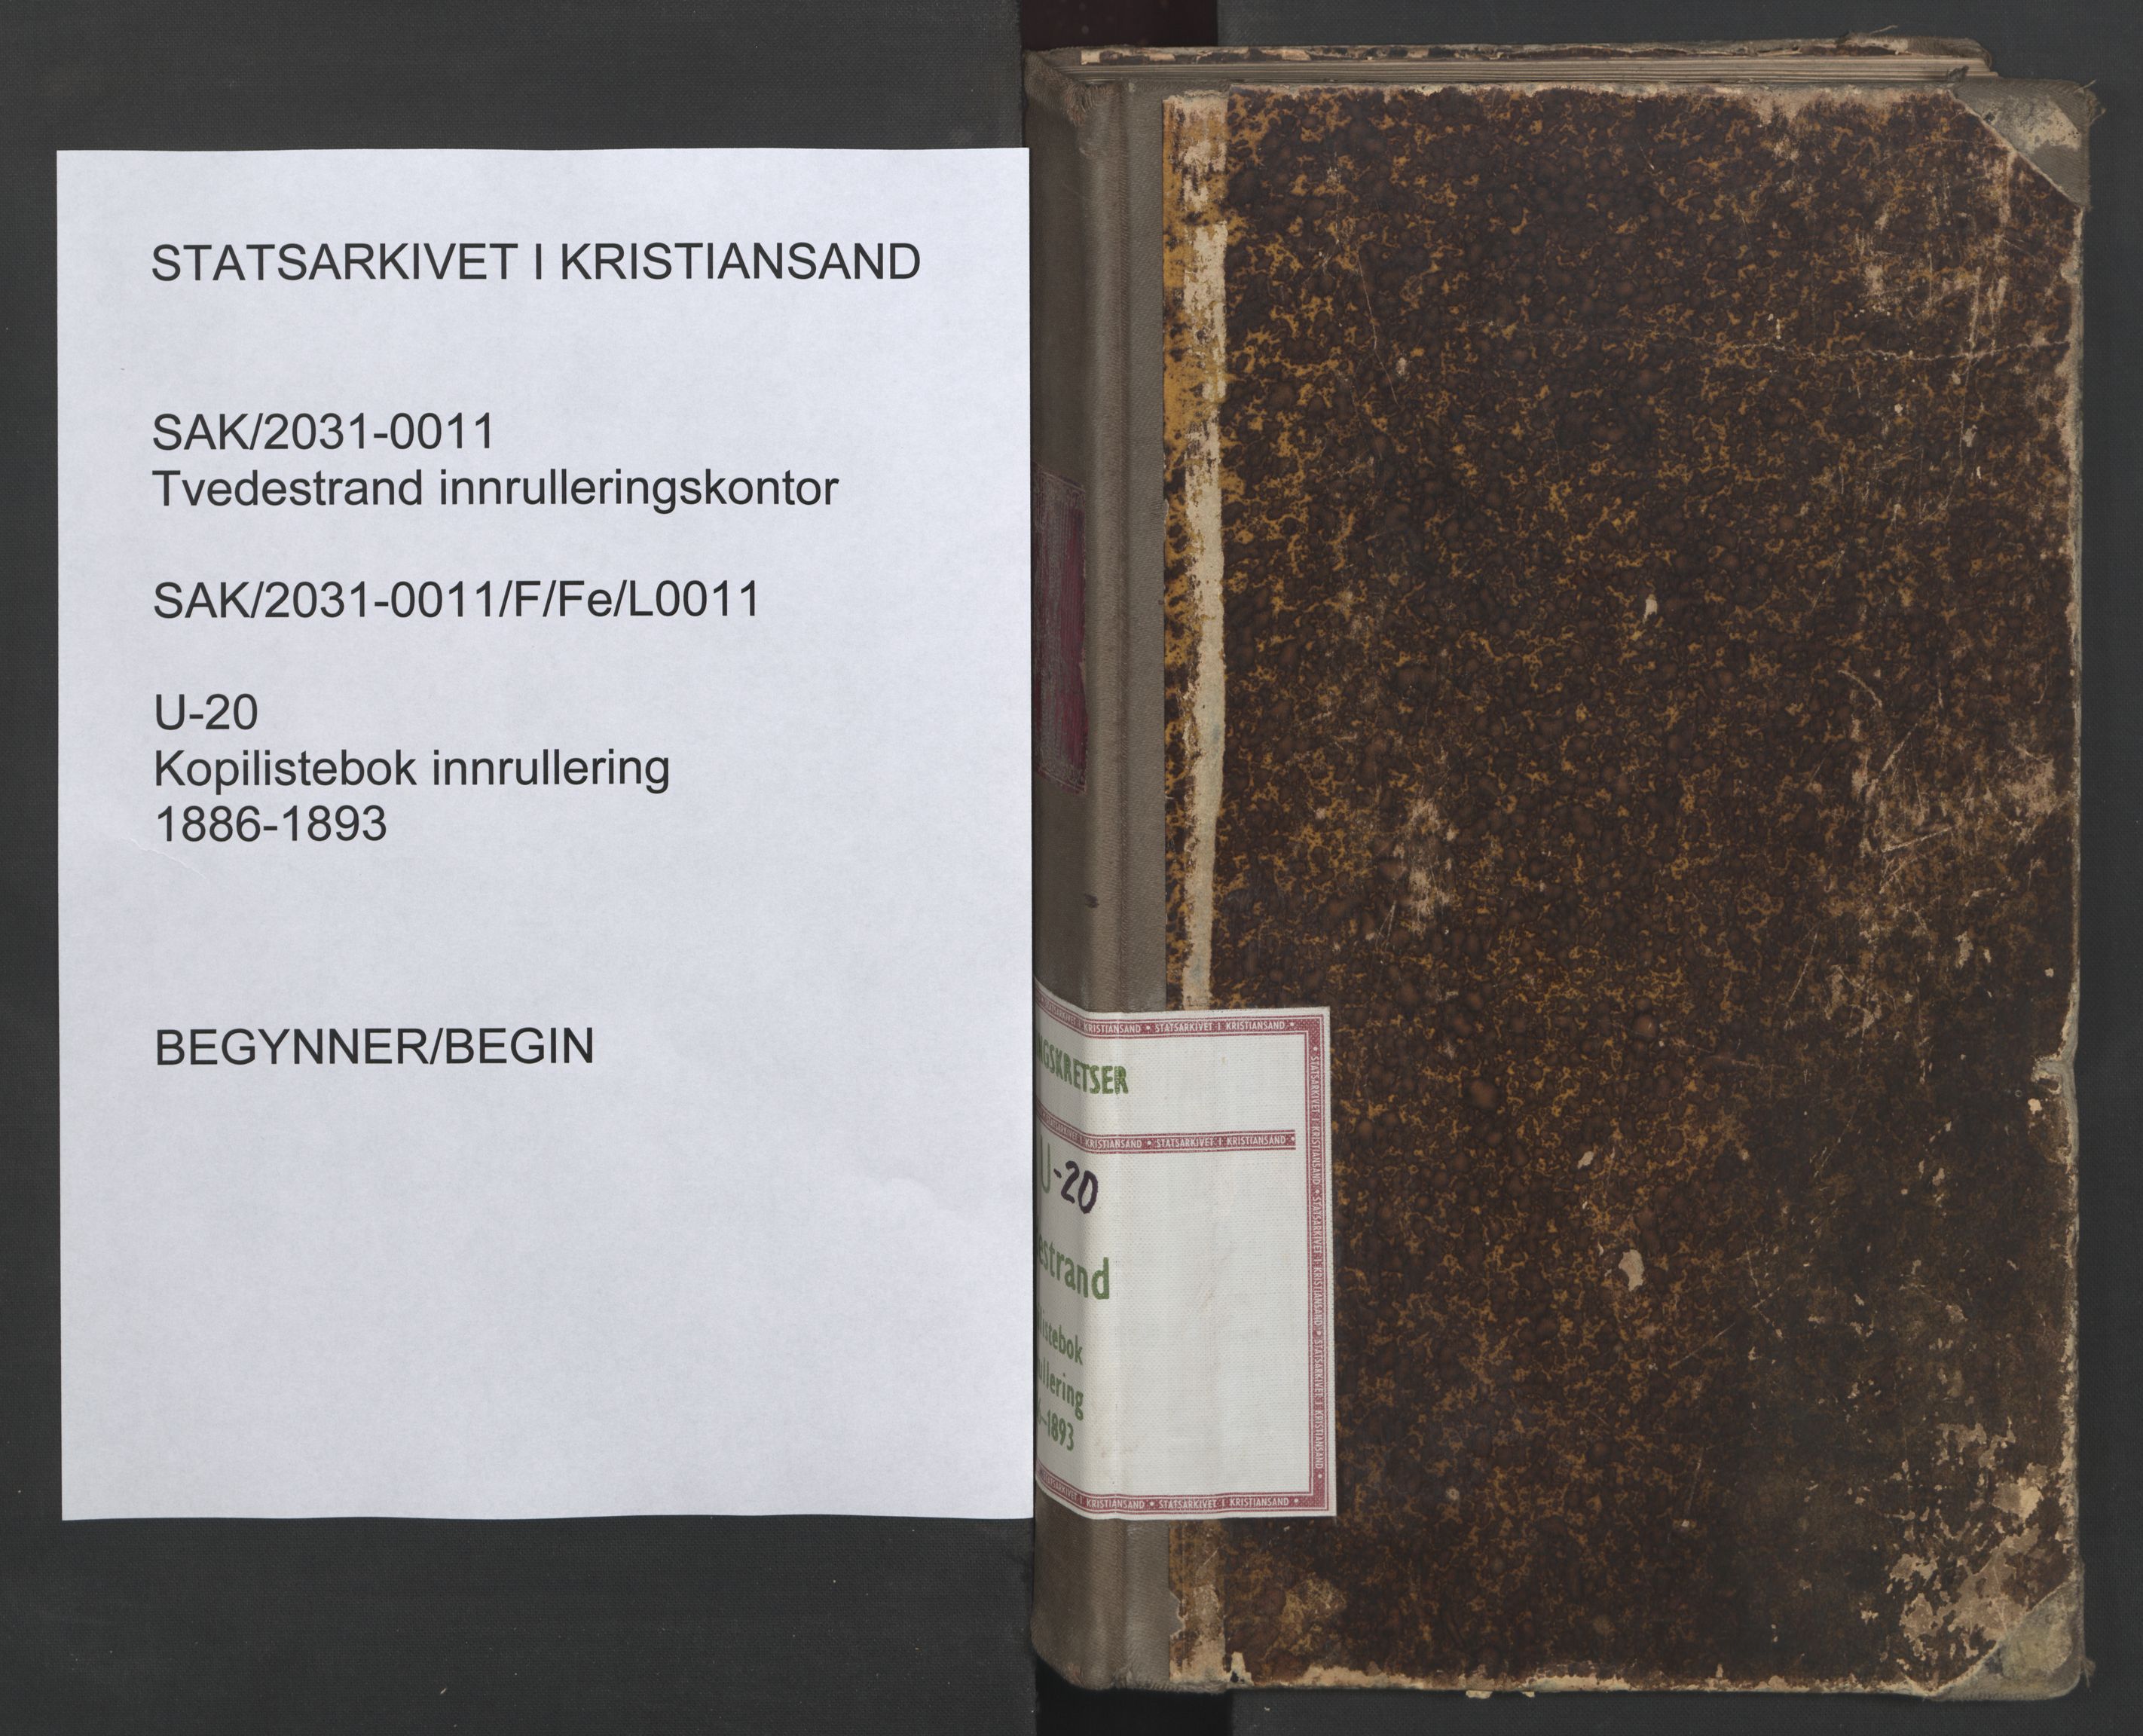 Tvedestrand mønstringskrets, SAK/2031-0011/F/Fe/L0011: Kopilistebok innrullering, U-20, 1886-1893, p. 1